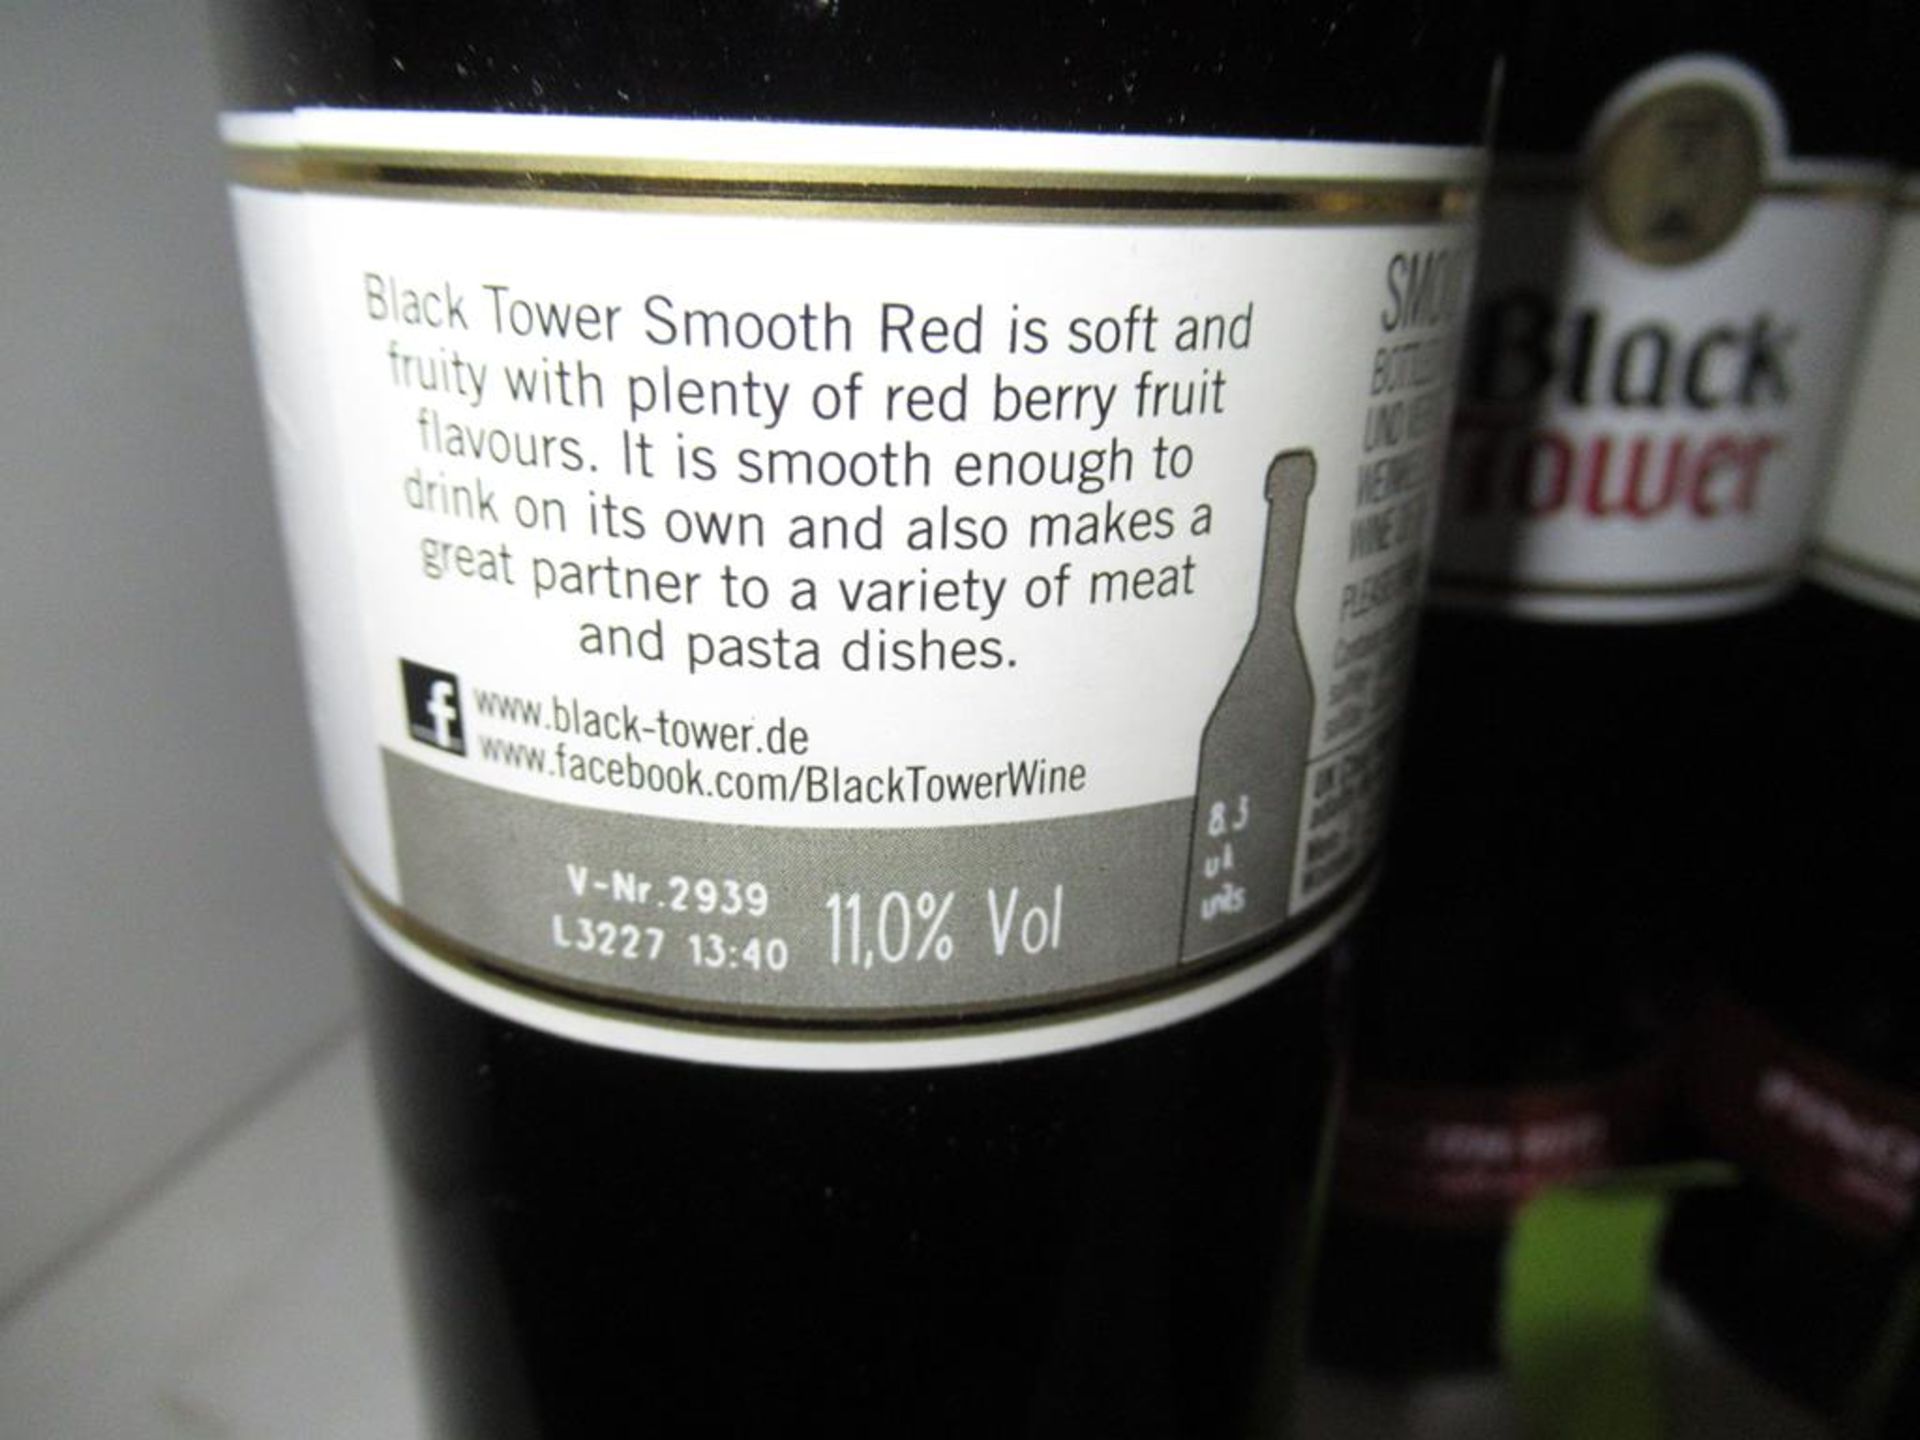 Six bottles of Black Tower Pinot Noir Regent red wine, four bottles of Black Tower smooth red wine, - Image 10 of 11